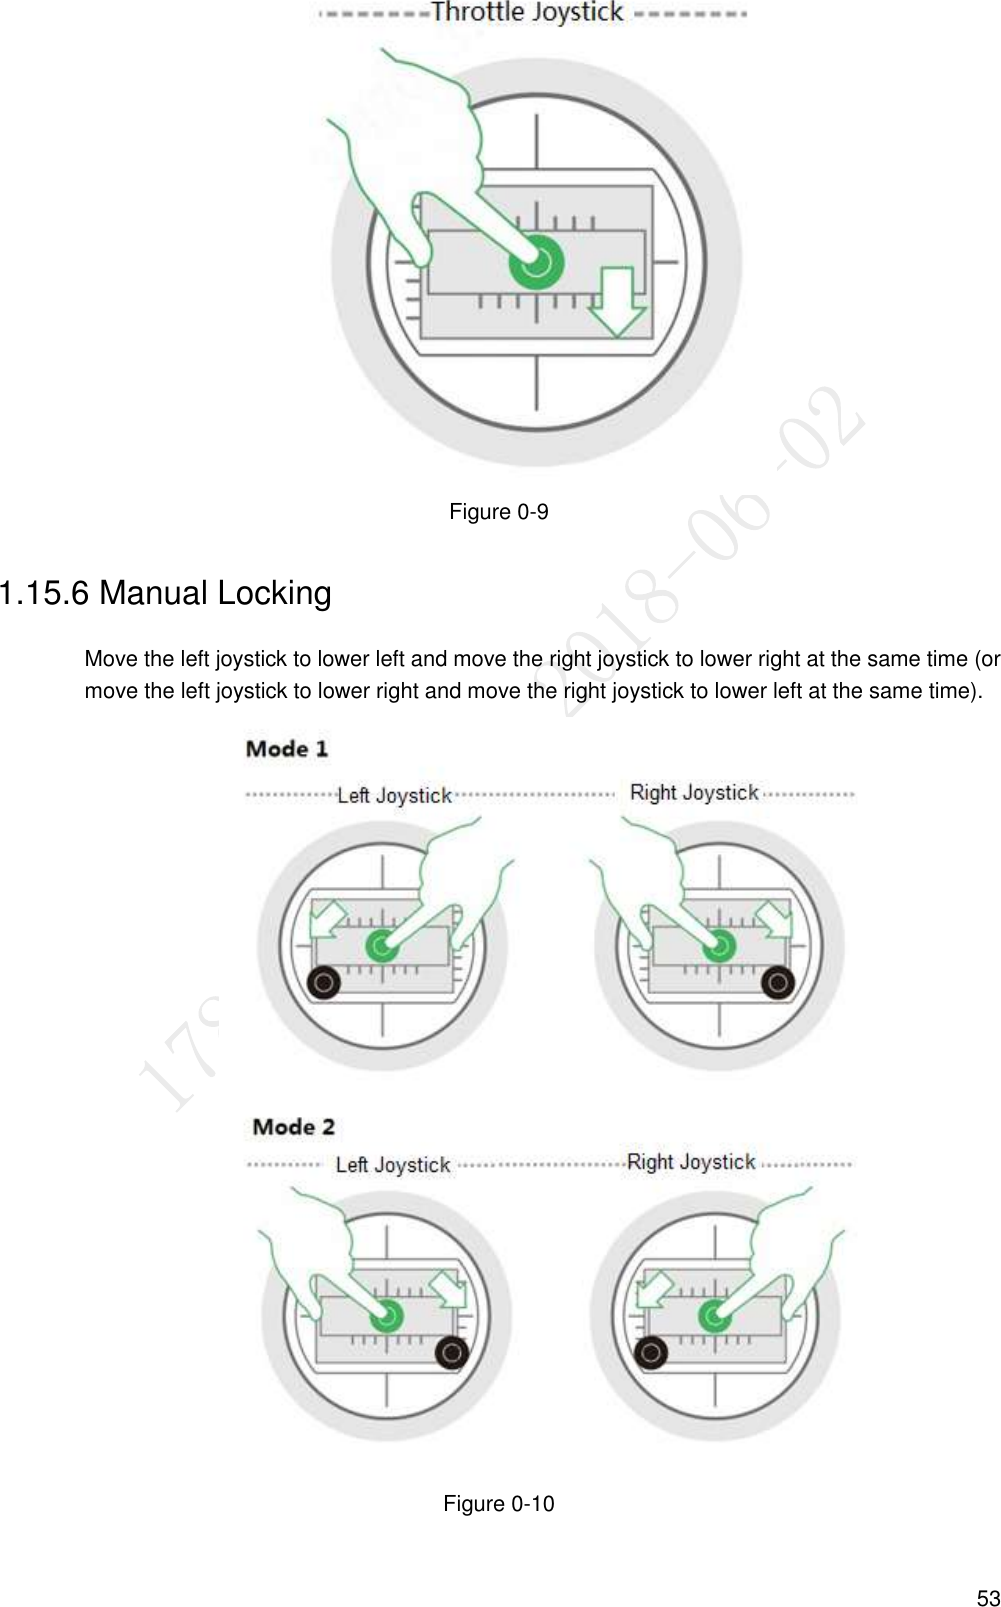  53  Figure 0-9 1.15.6 Manual Locking Move the left joystick to lower left and move the right joystick to lower right at the same time (or move the left joystick to lower right and move the right joystick to lower left at the same time).  Figure 0-10 